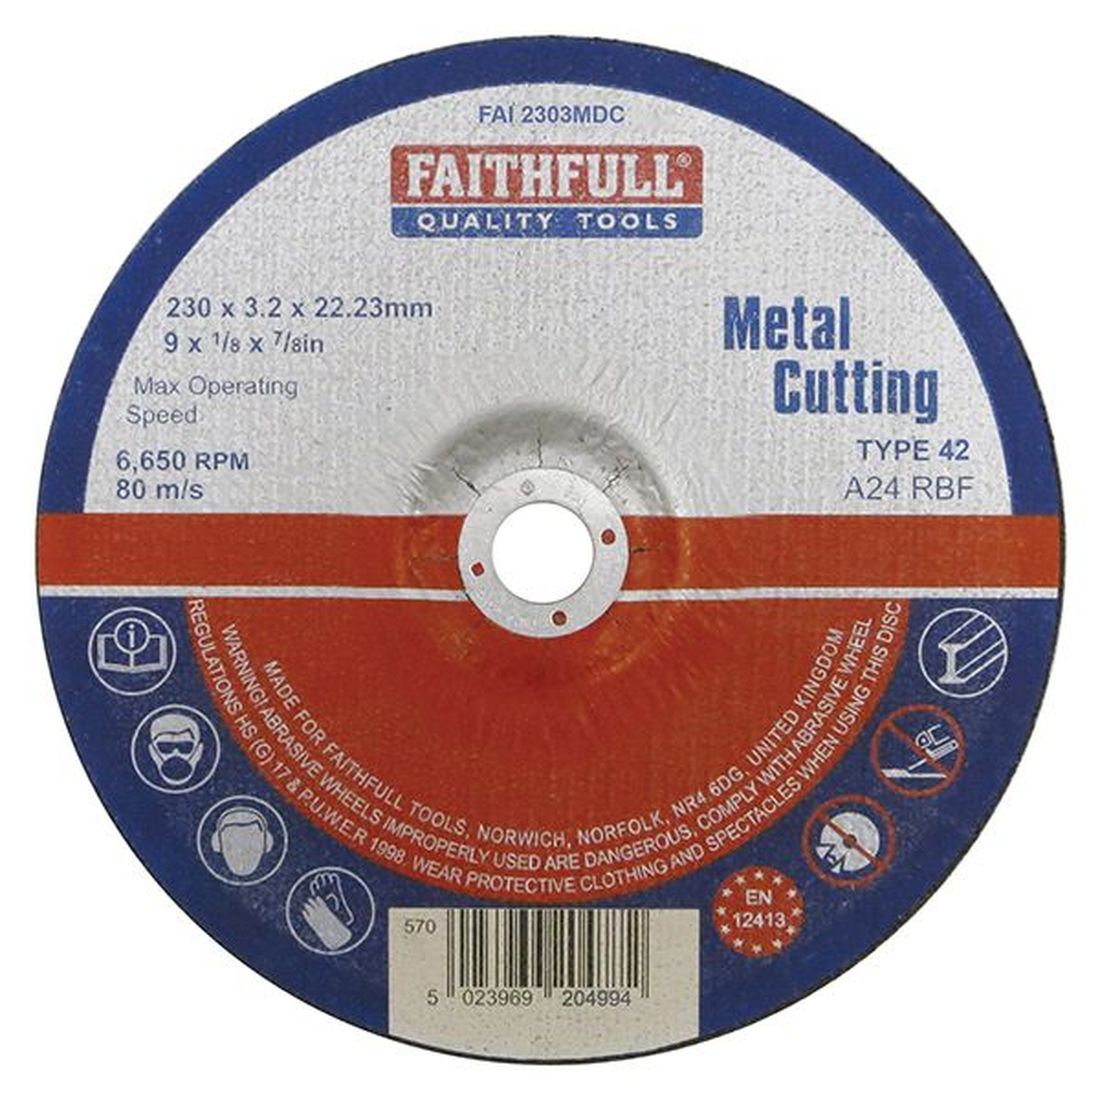 Faithfull Depressed Centre Metal Cutting Disc 230 x 3.2 x 22.23mm                         